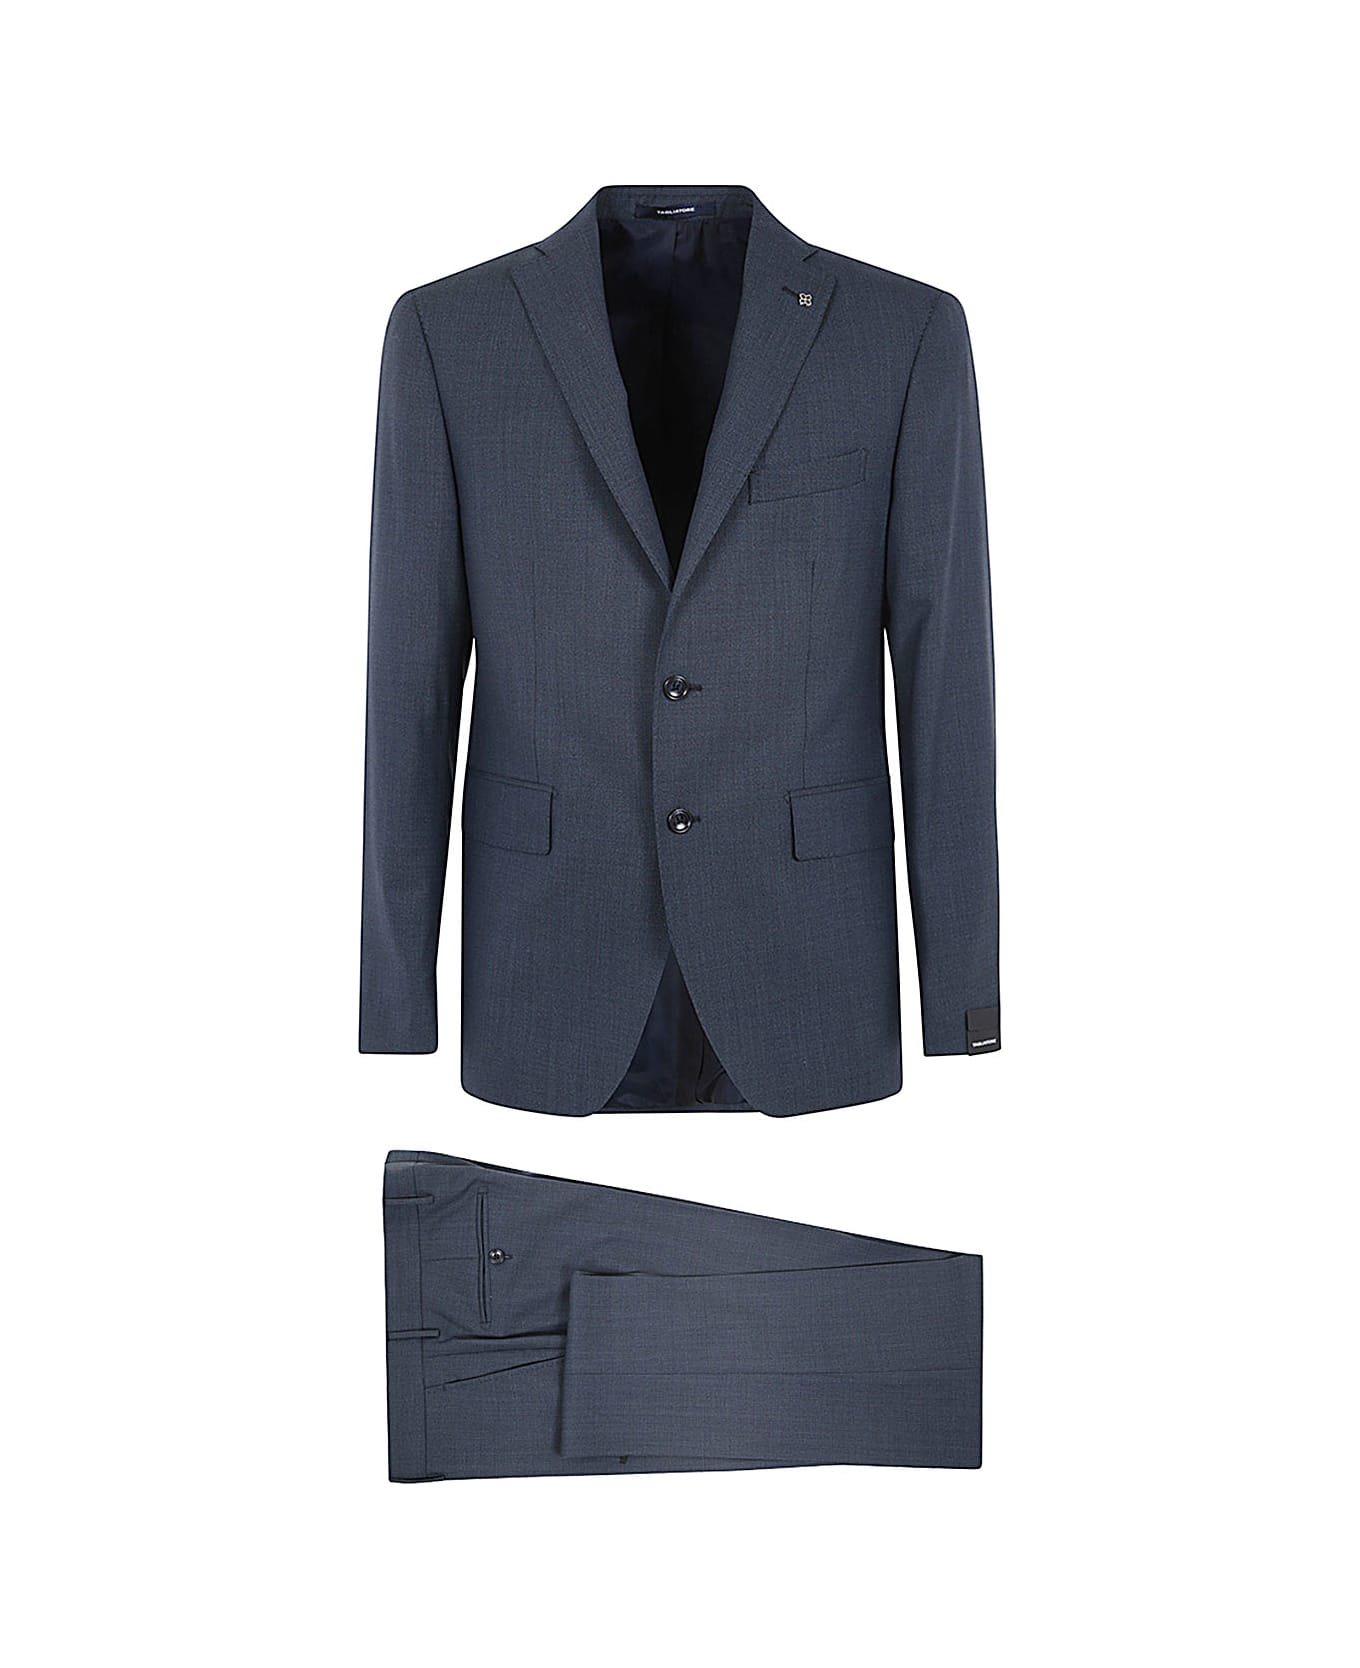 Tagliatore Suit - Petrol Blue スーツ